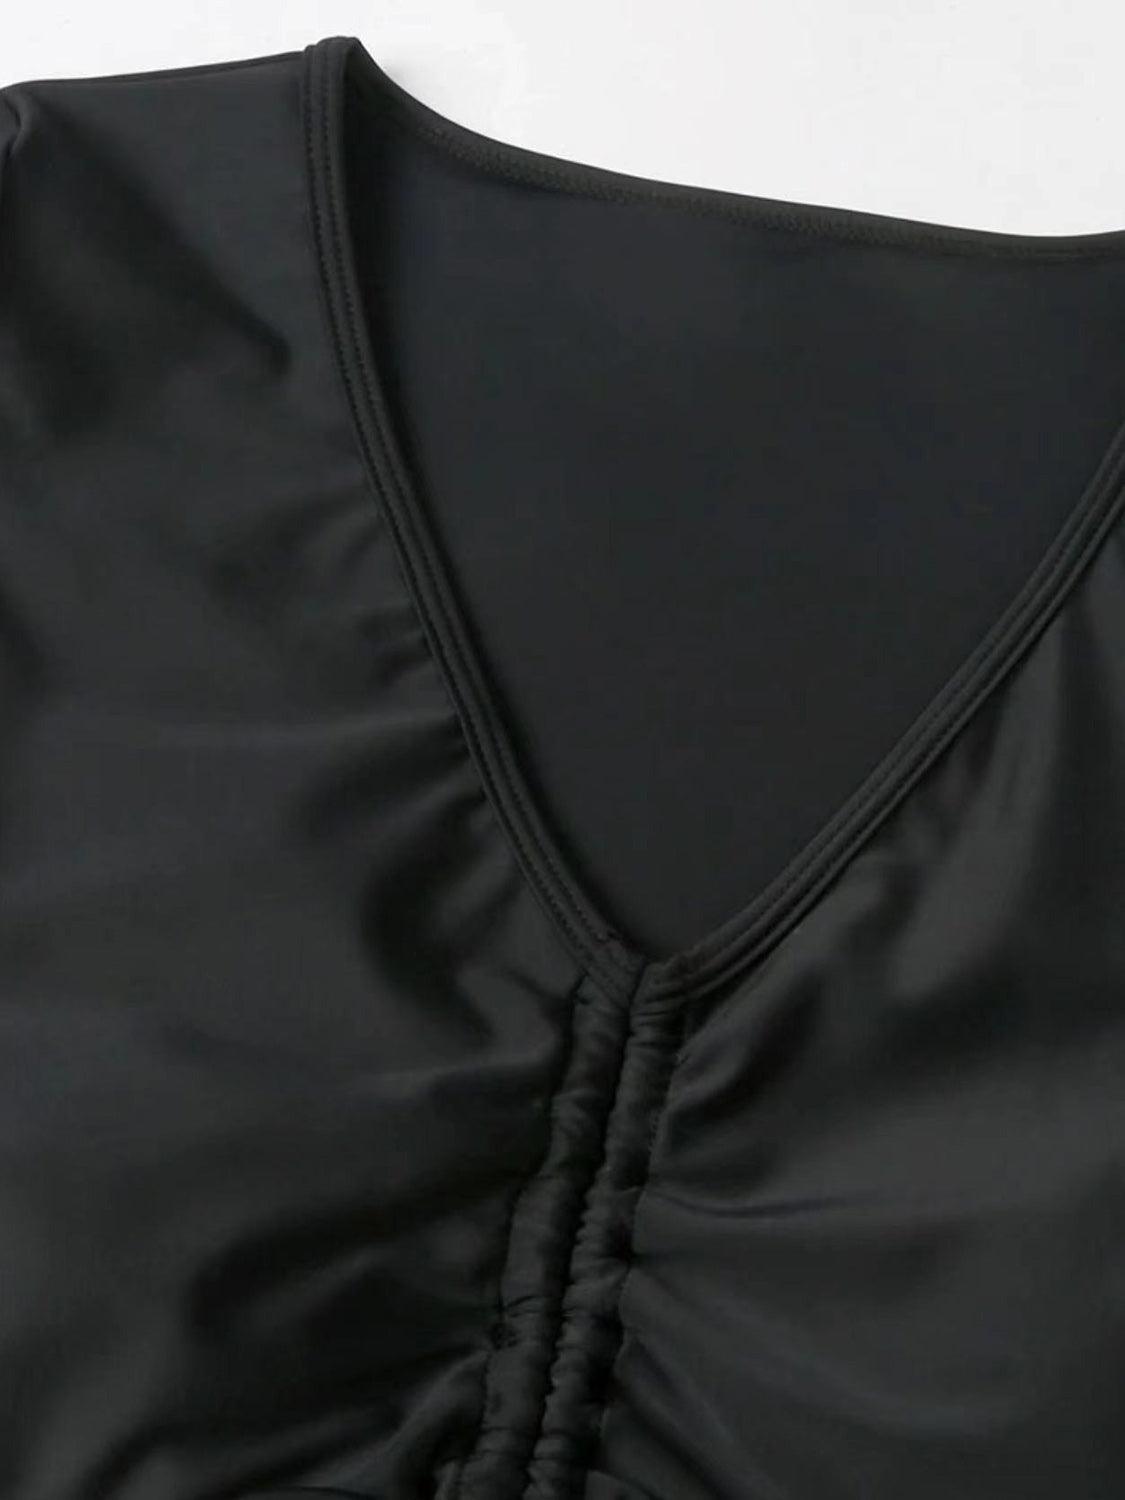 Bona Fide Fashion - Drawstring V-Neck Short Sleeve Two-Piece Swim Set - Women Fashion - Bona Fide Fashion